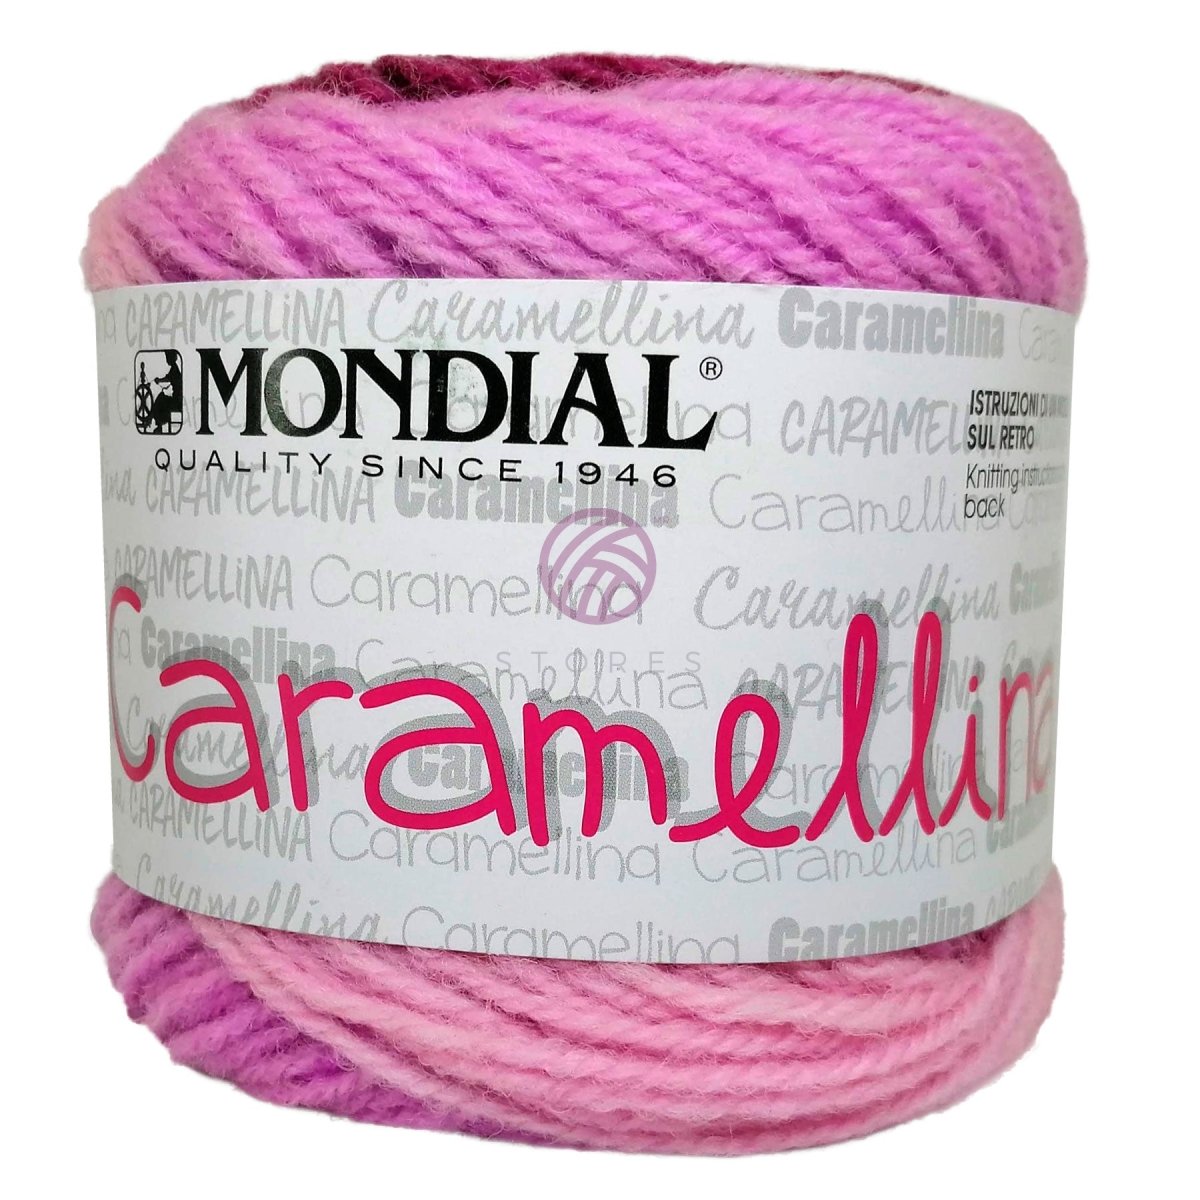 CARAMELLINA - Crochetstores12519088020586352807